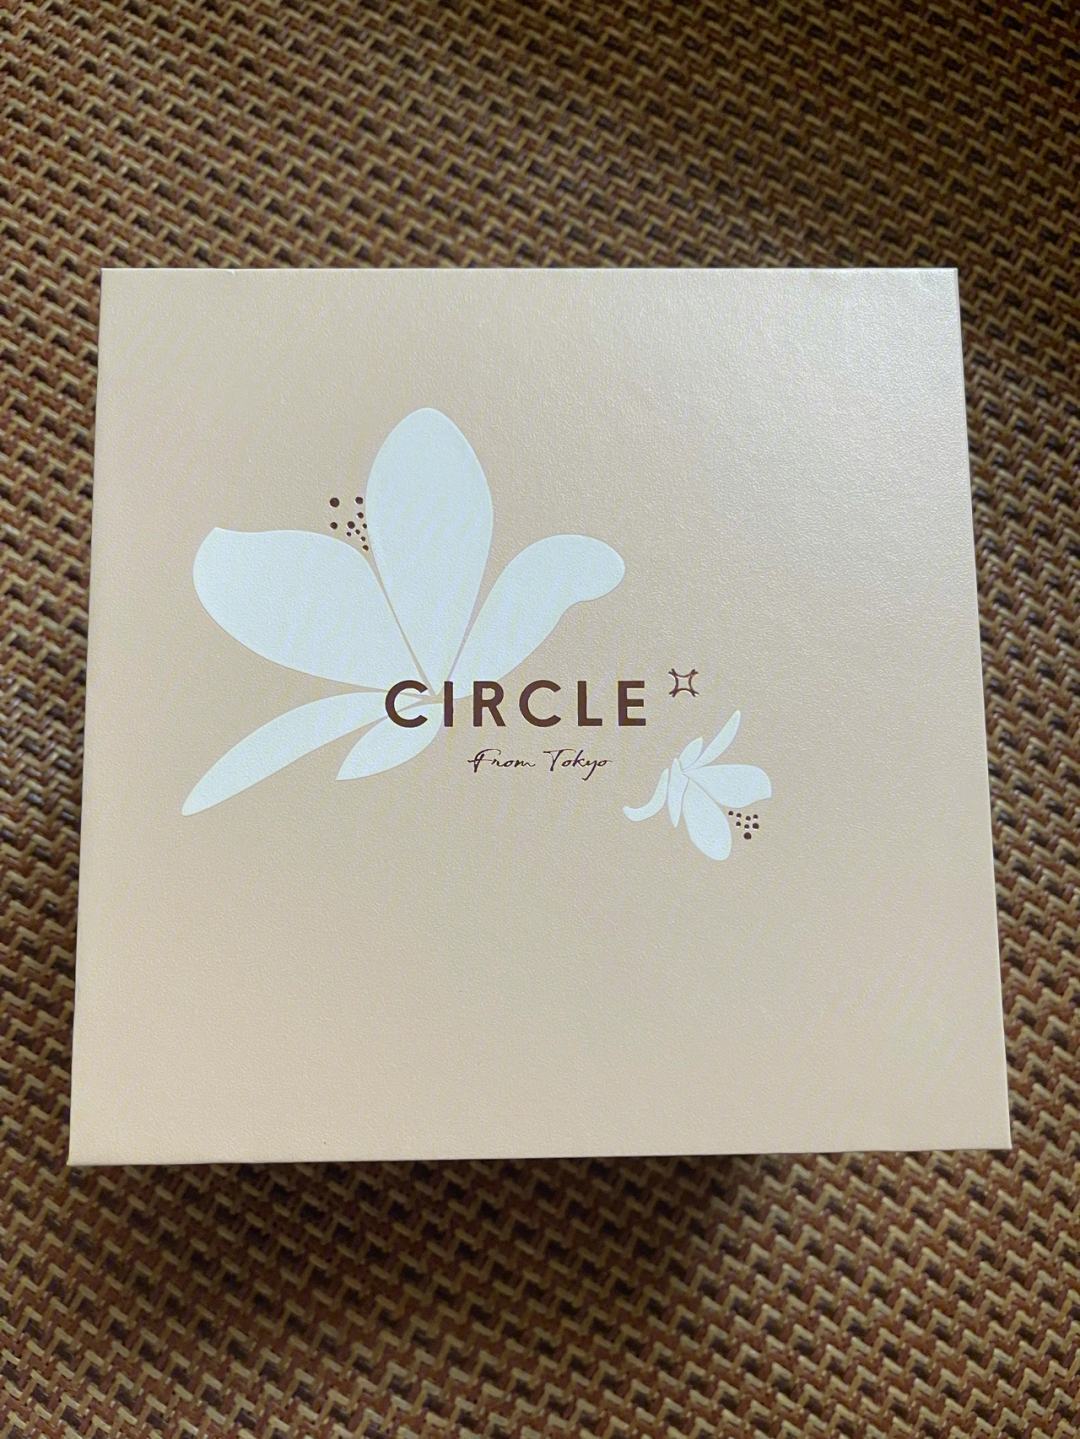 circle大源图片